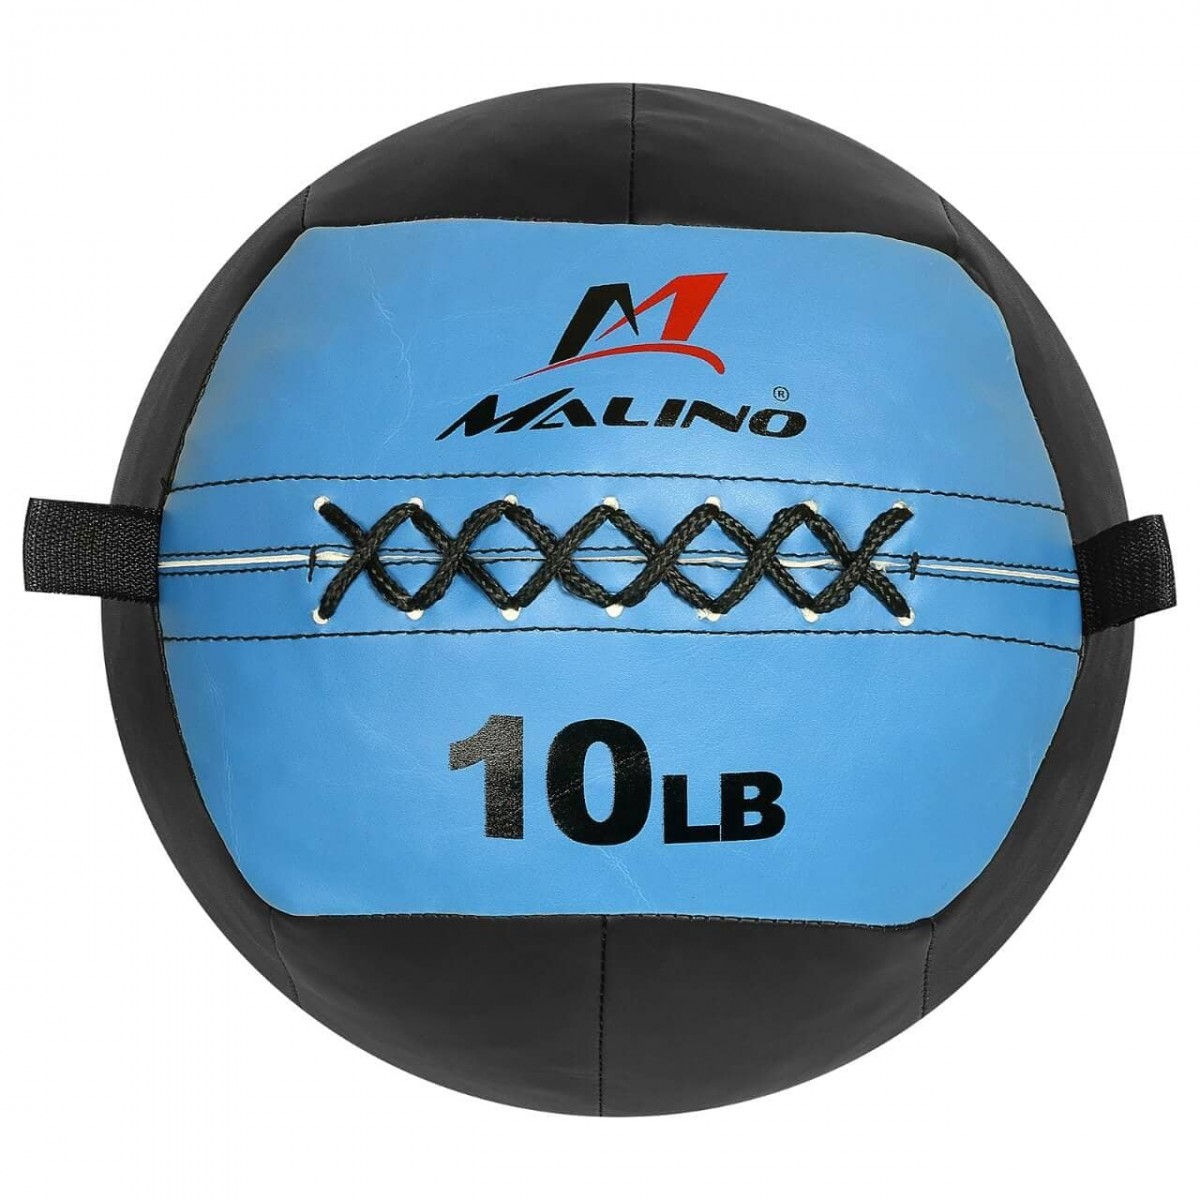 MALINO CROSS FIT WALL MEDICINE BALL BLACK-BLUE